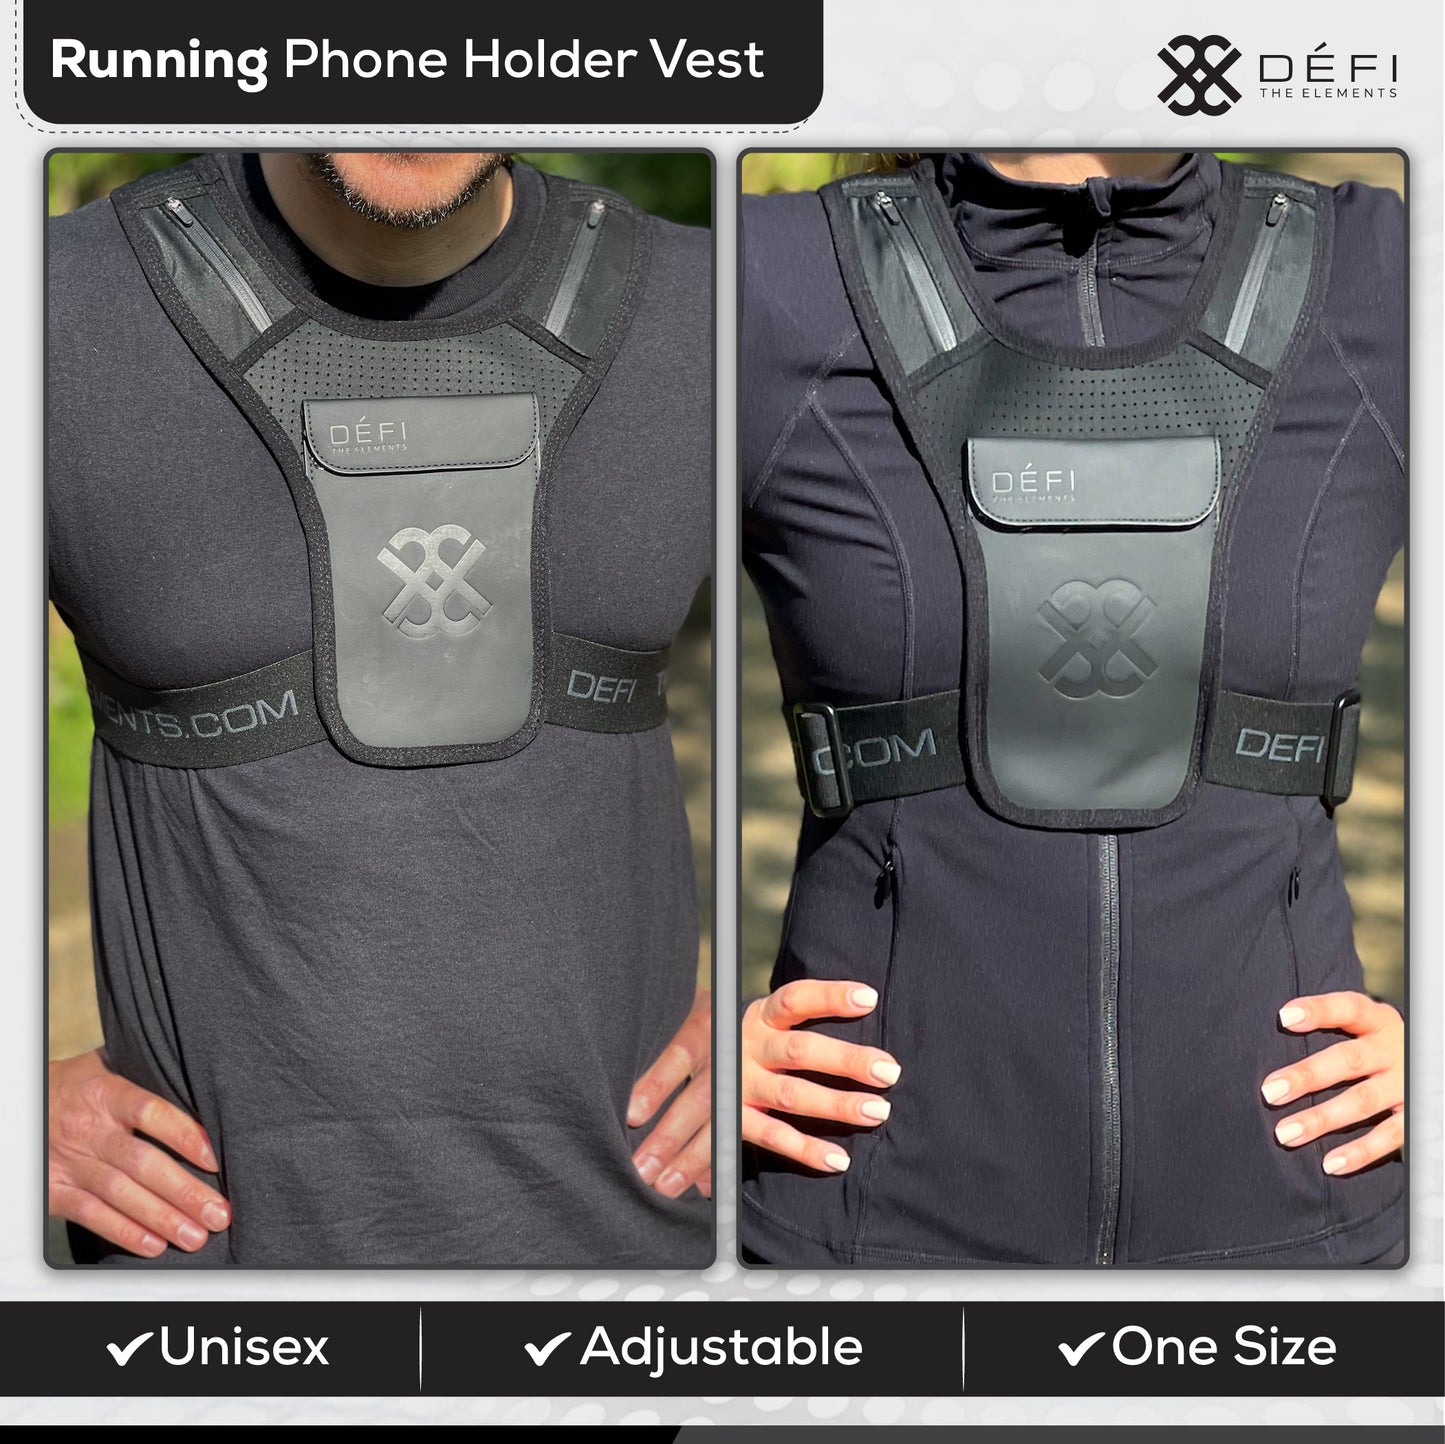 DÉFI THE ELEMENTS | Best In Class Premium Running Vest Phone Holder